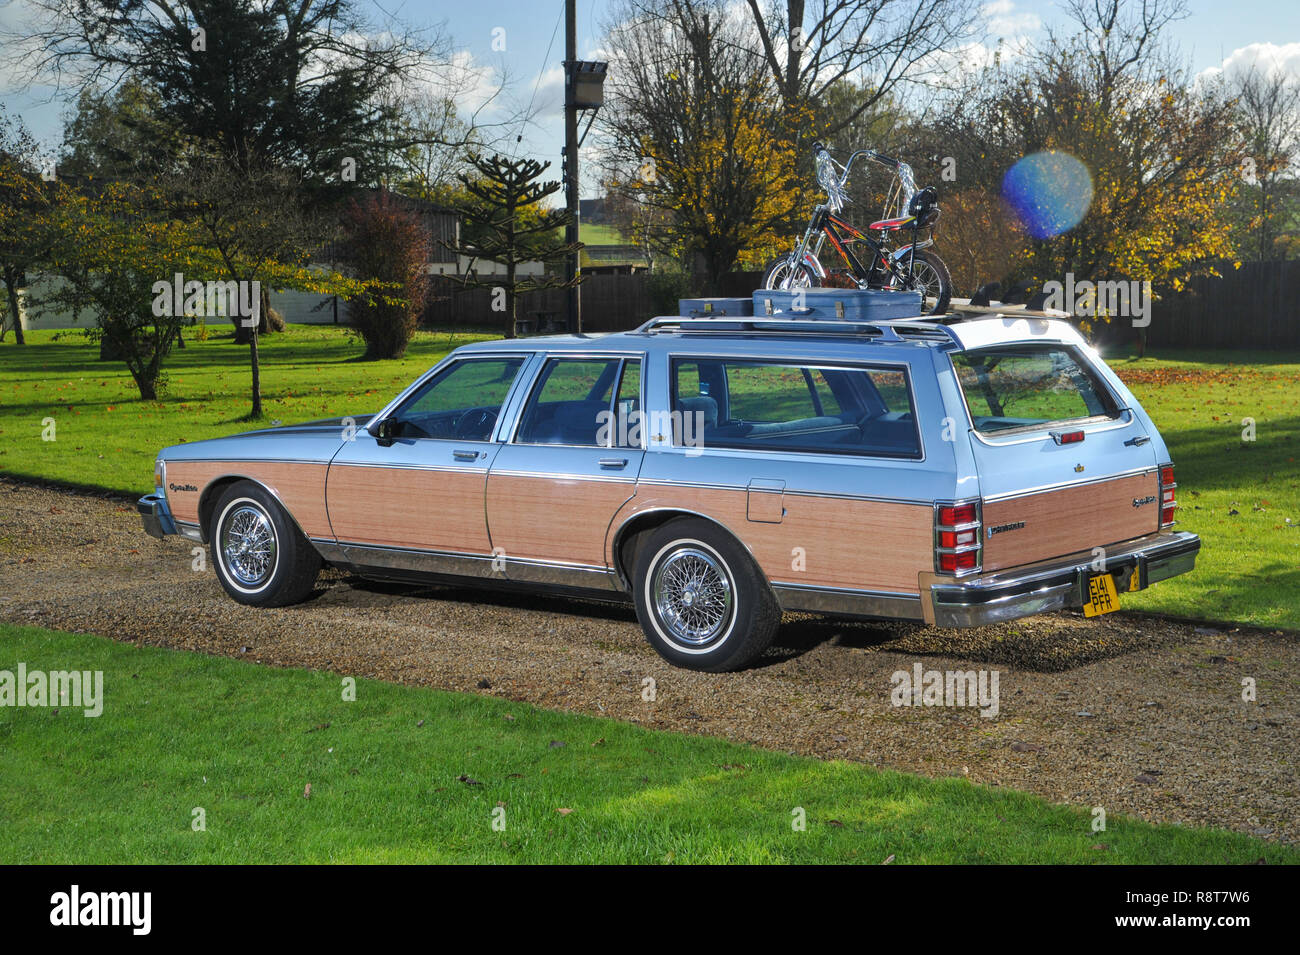 1986-chevrolet-caprice-woody-kombi-holz-amerikanische-familie-immobilien-auto-getrimmt-r8t7w6.jpg